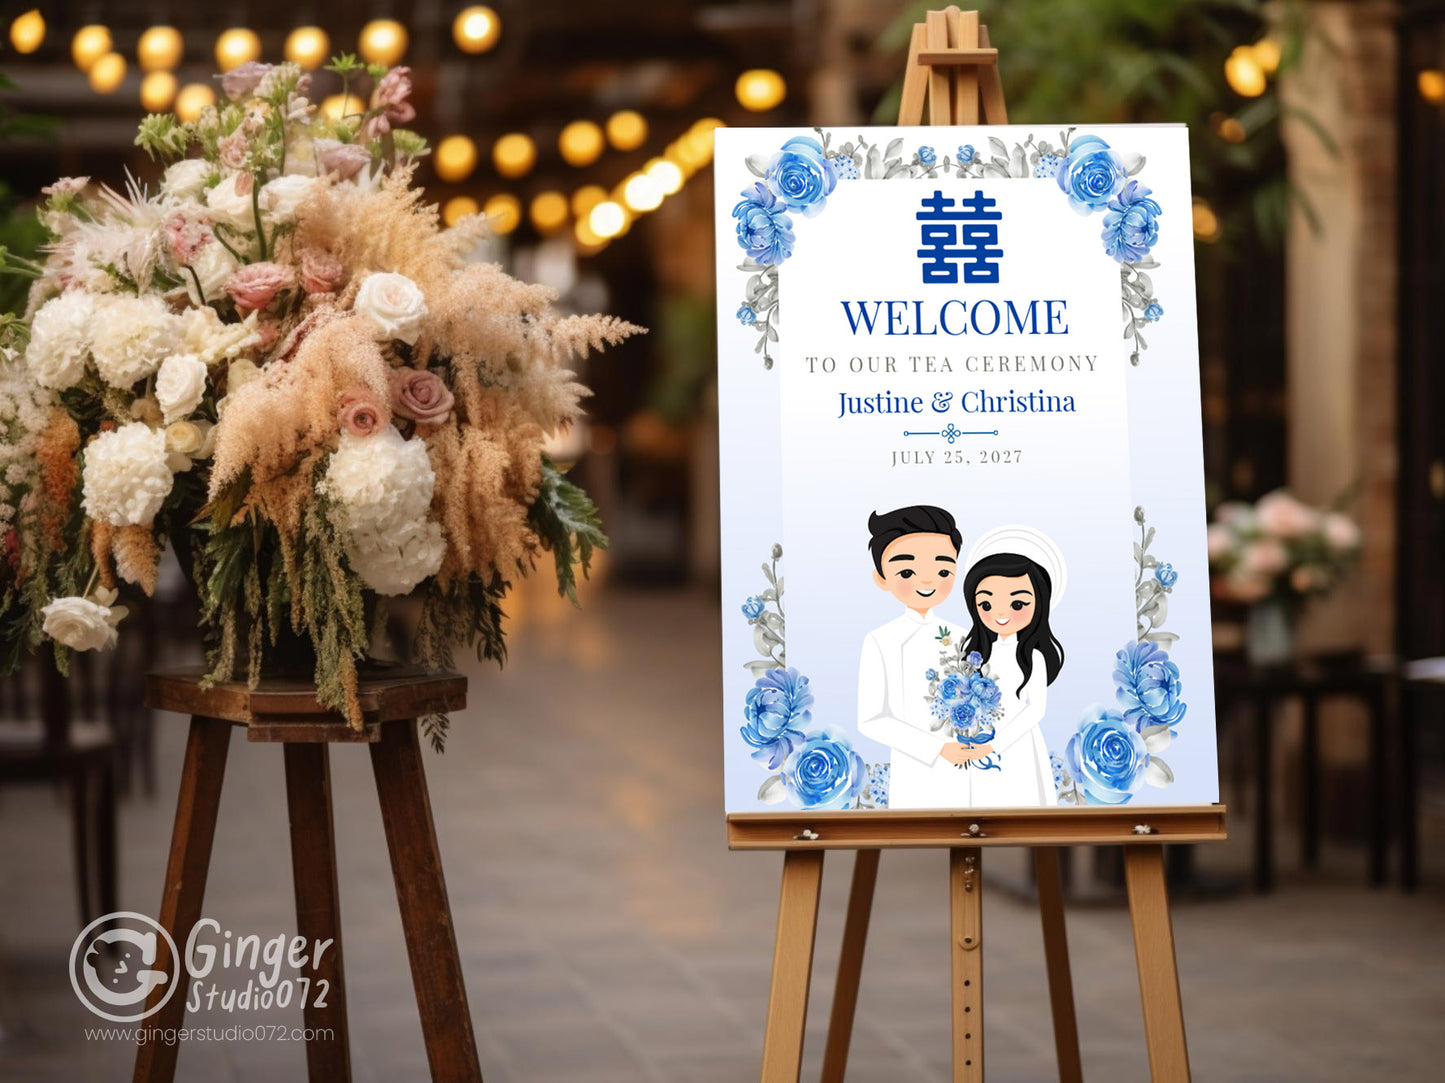 Cute Vietnamese Wedding Welcome sign, customize wedding sign, Tea ceremony event #wcsl2307010V